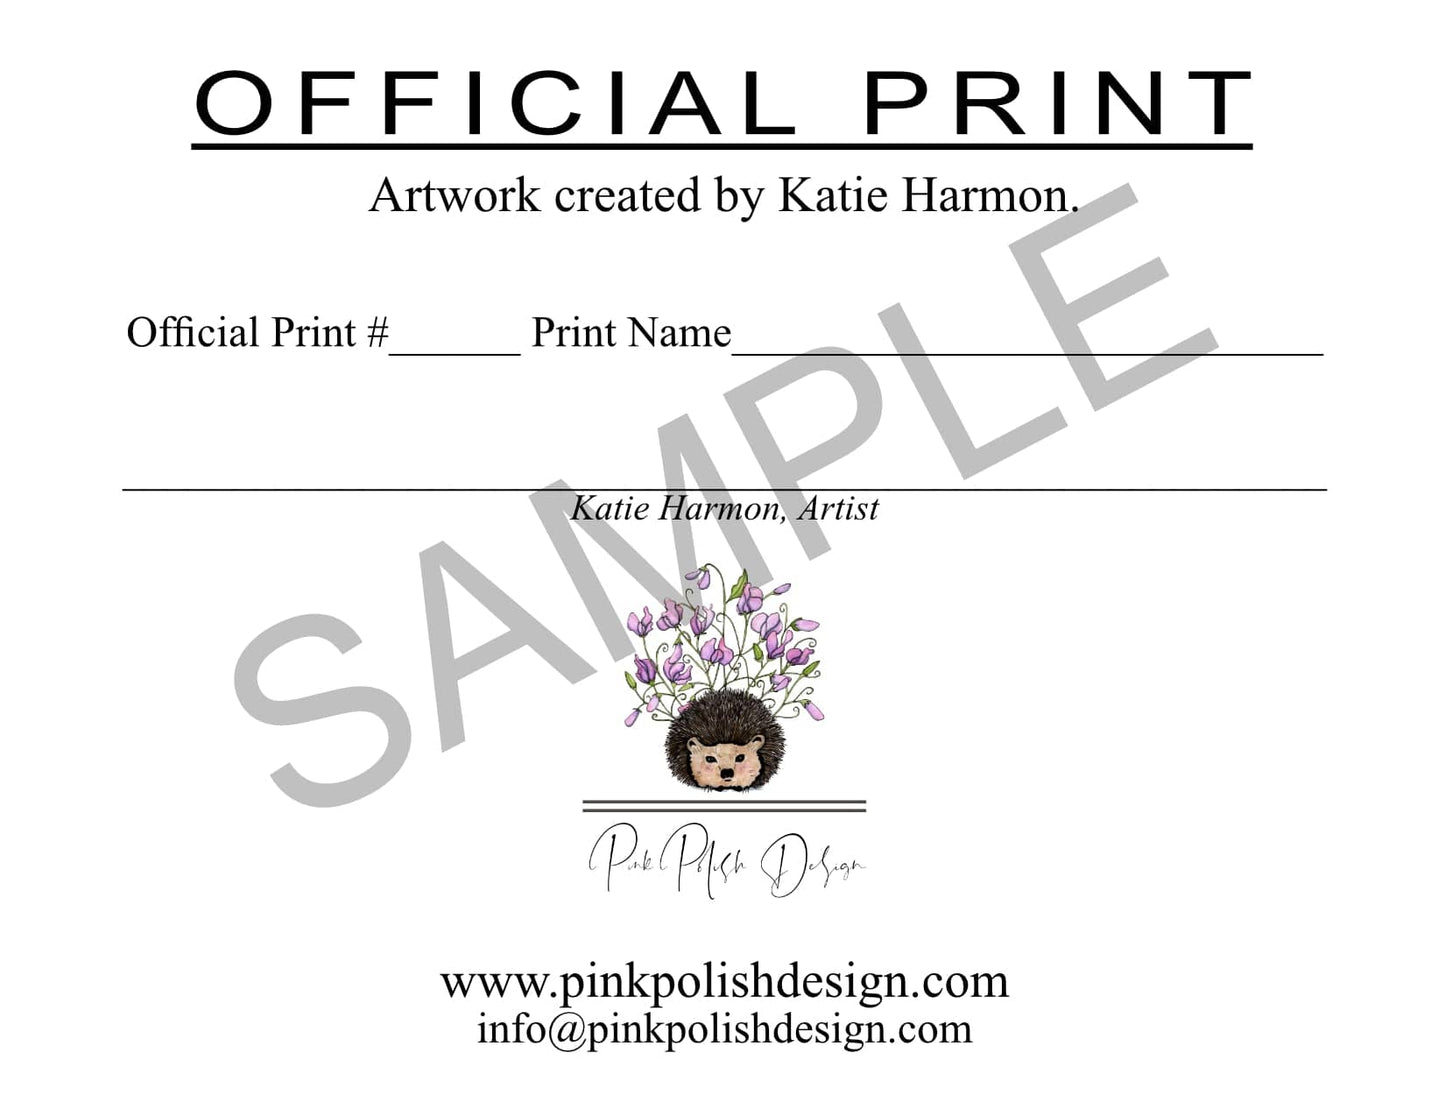 PinkPolish Design Art Prints "Through the Looking Glass" Ink Drawing: Art Print